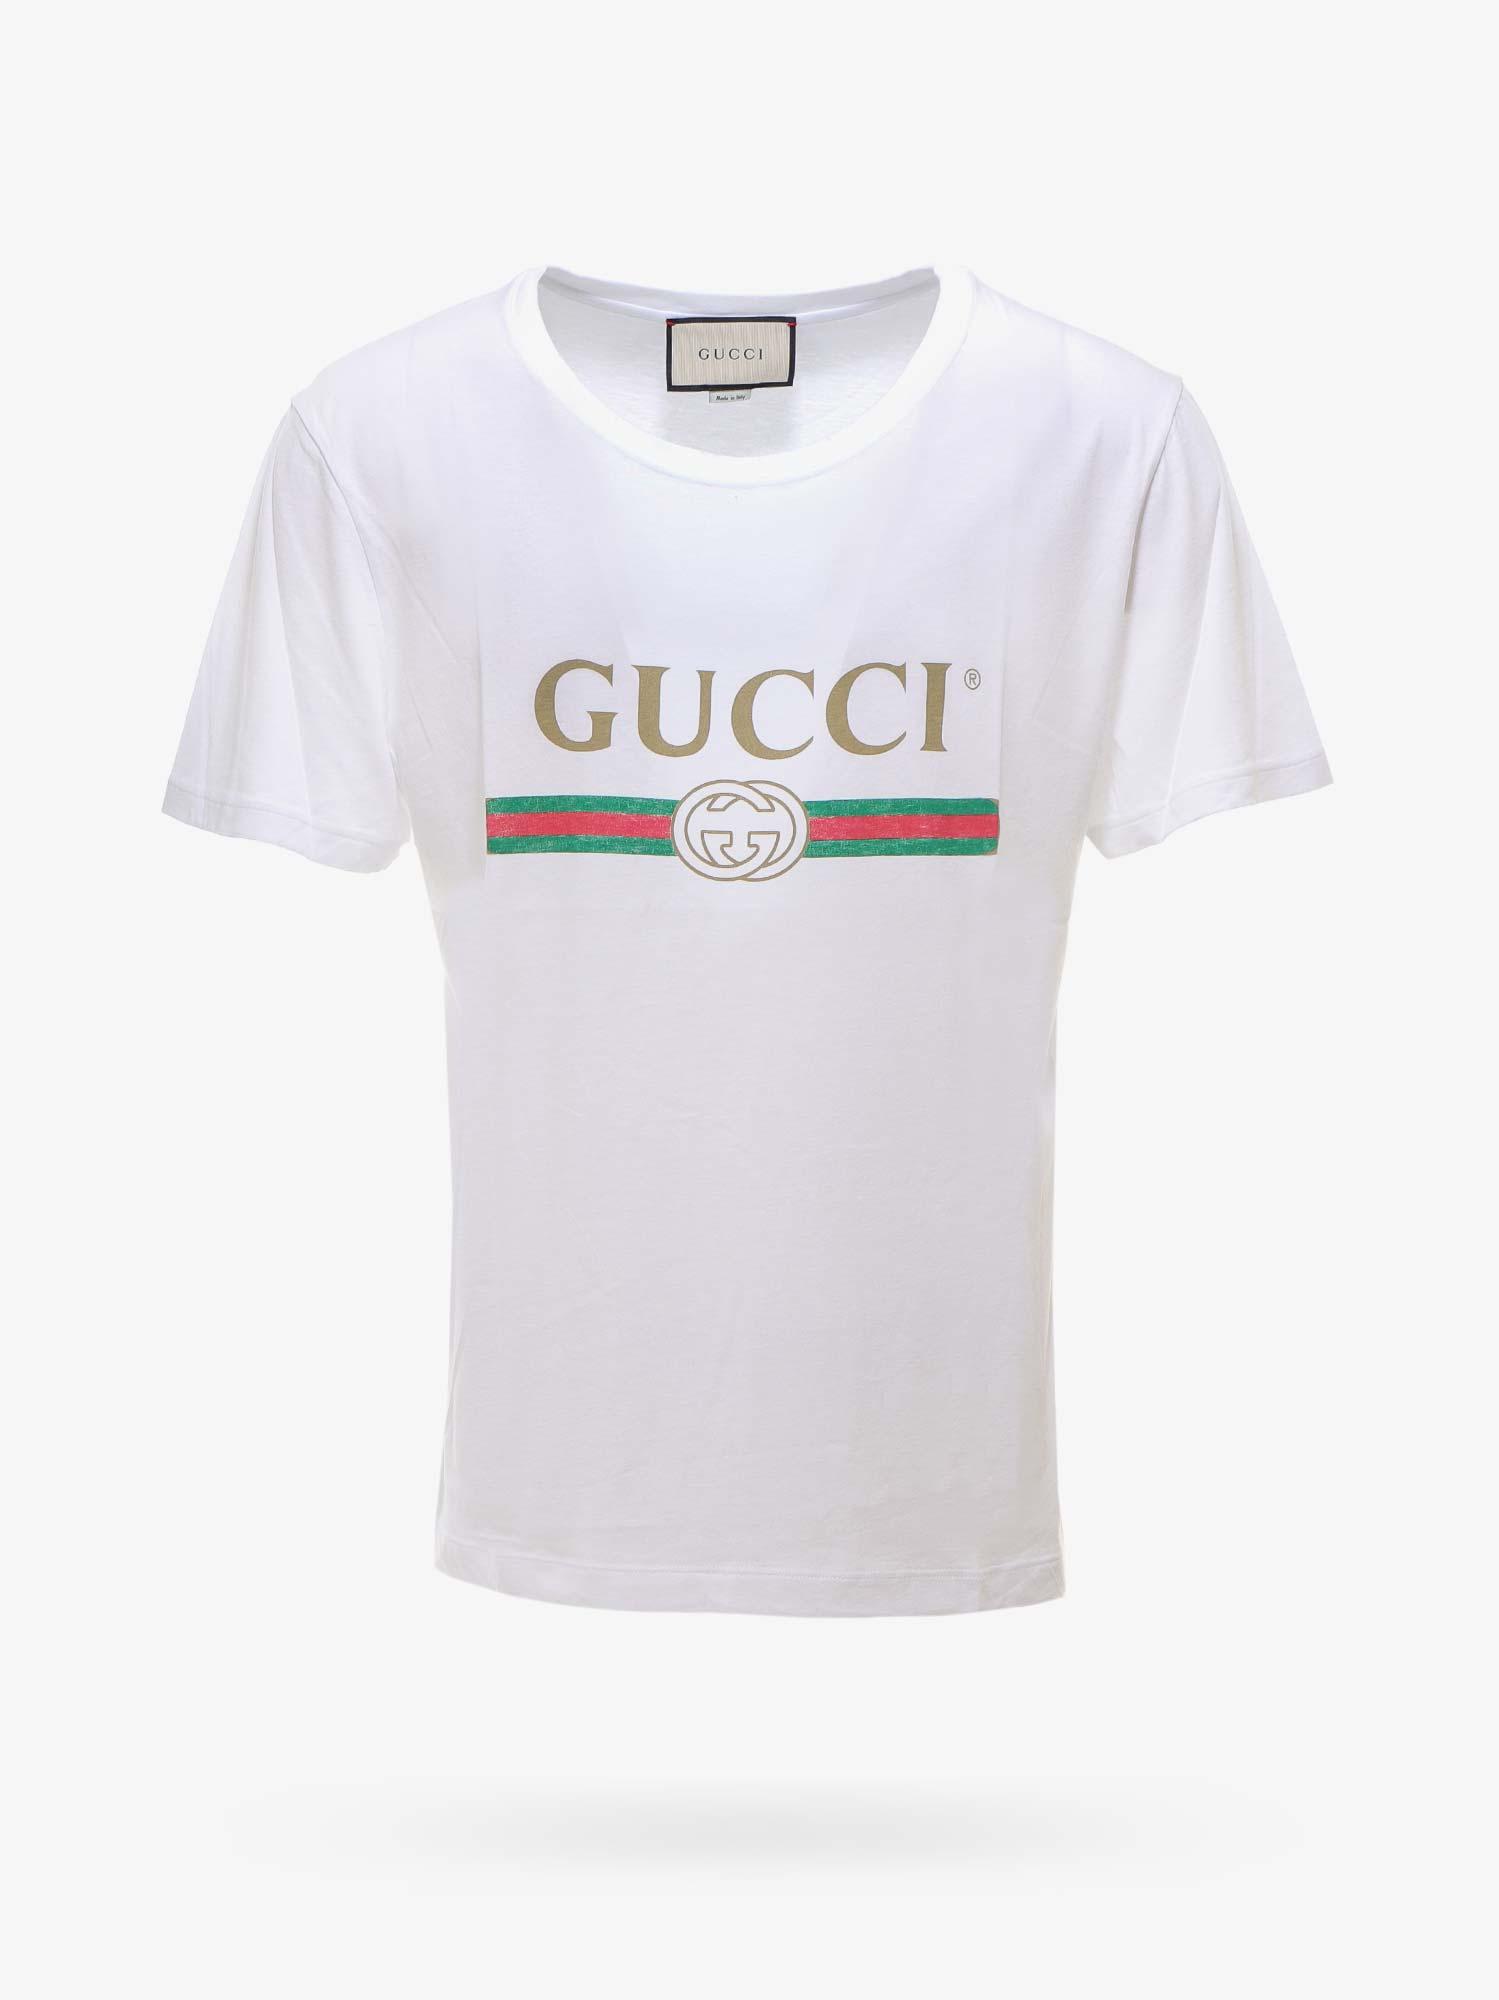 gucci white shirts